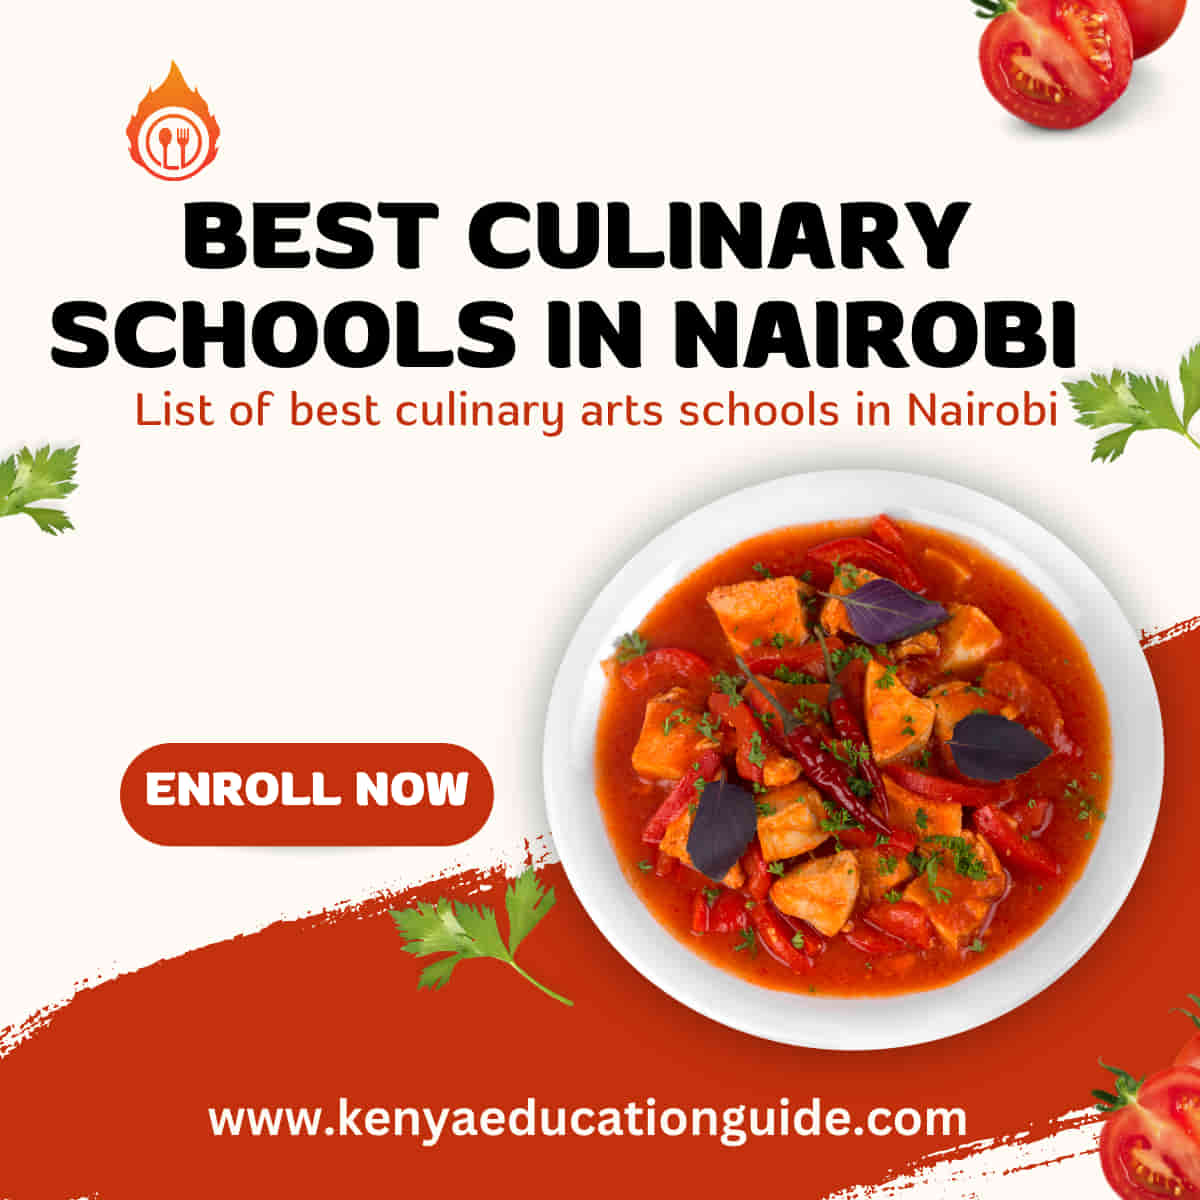 Culinary schools in Nairobi